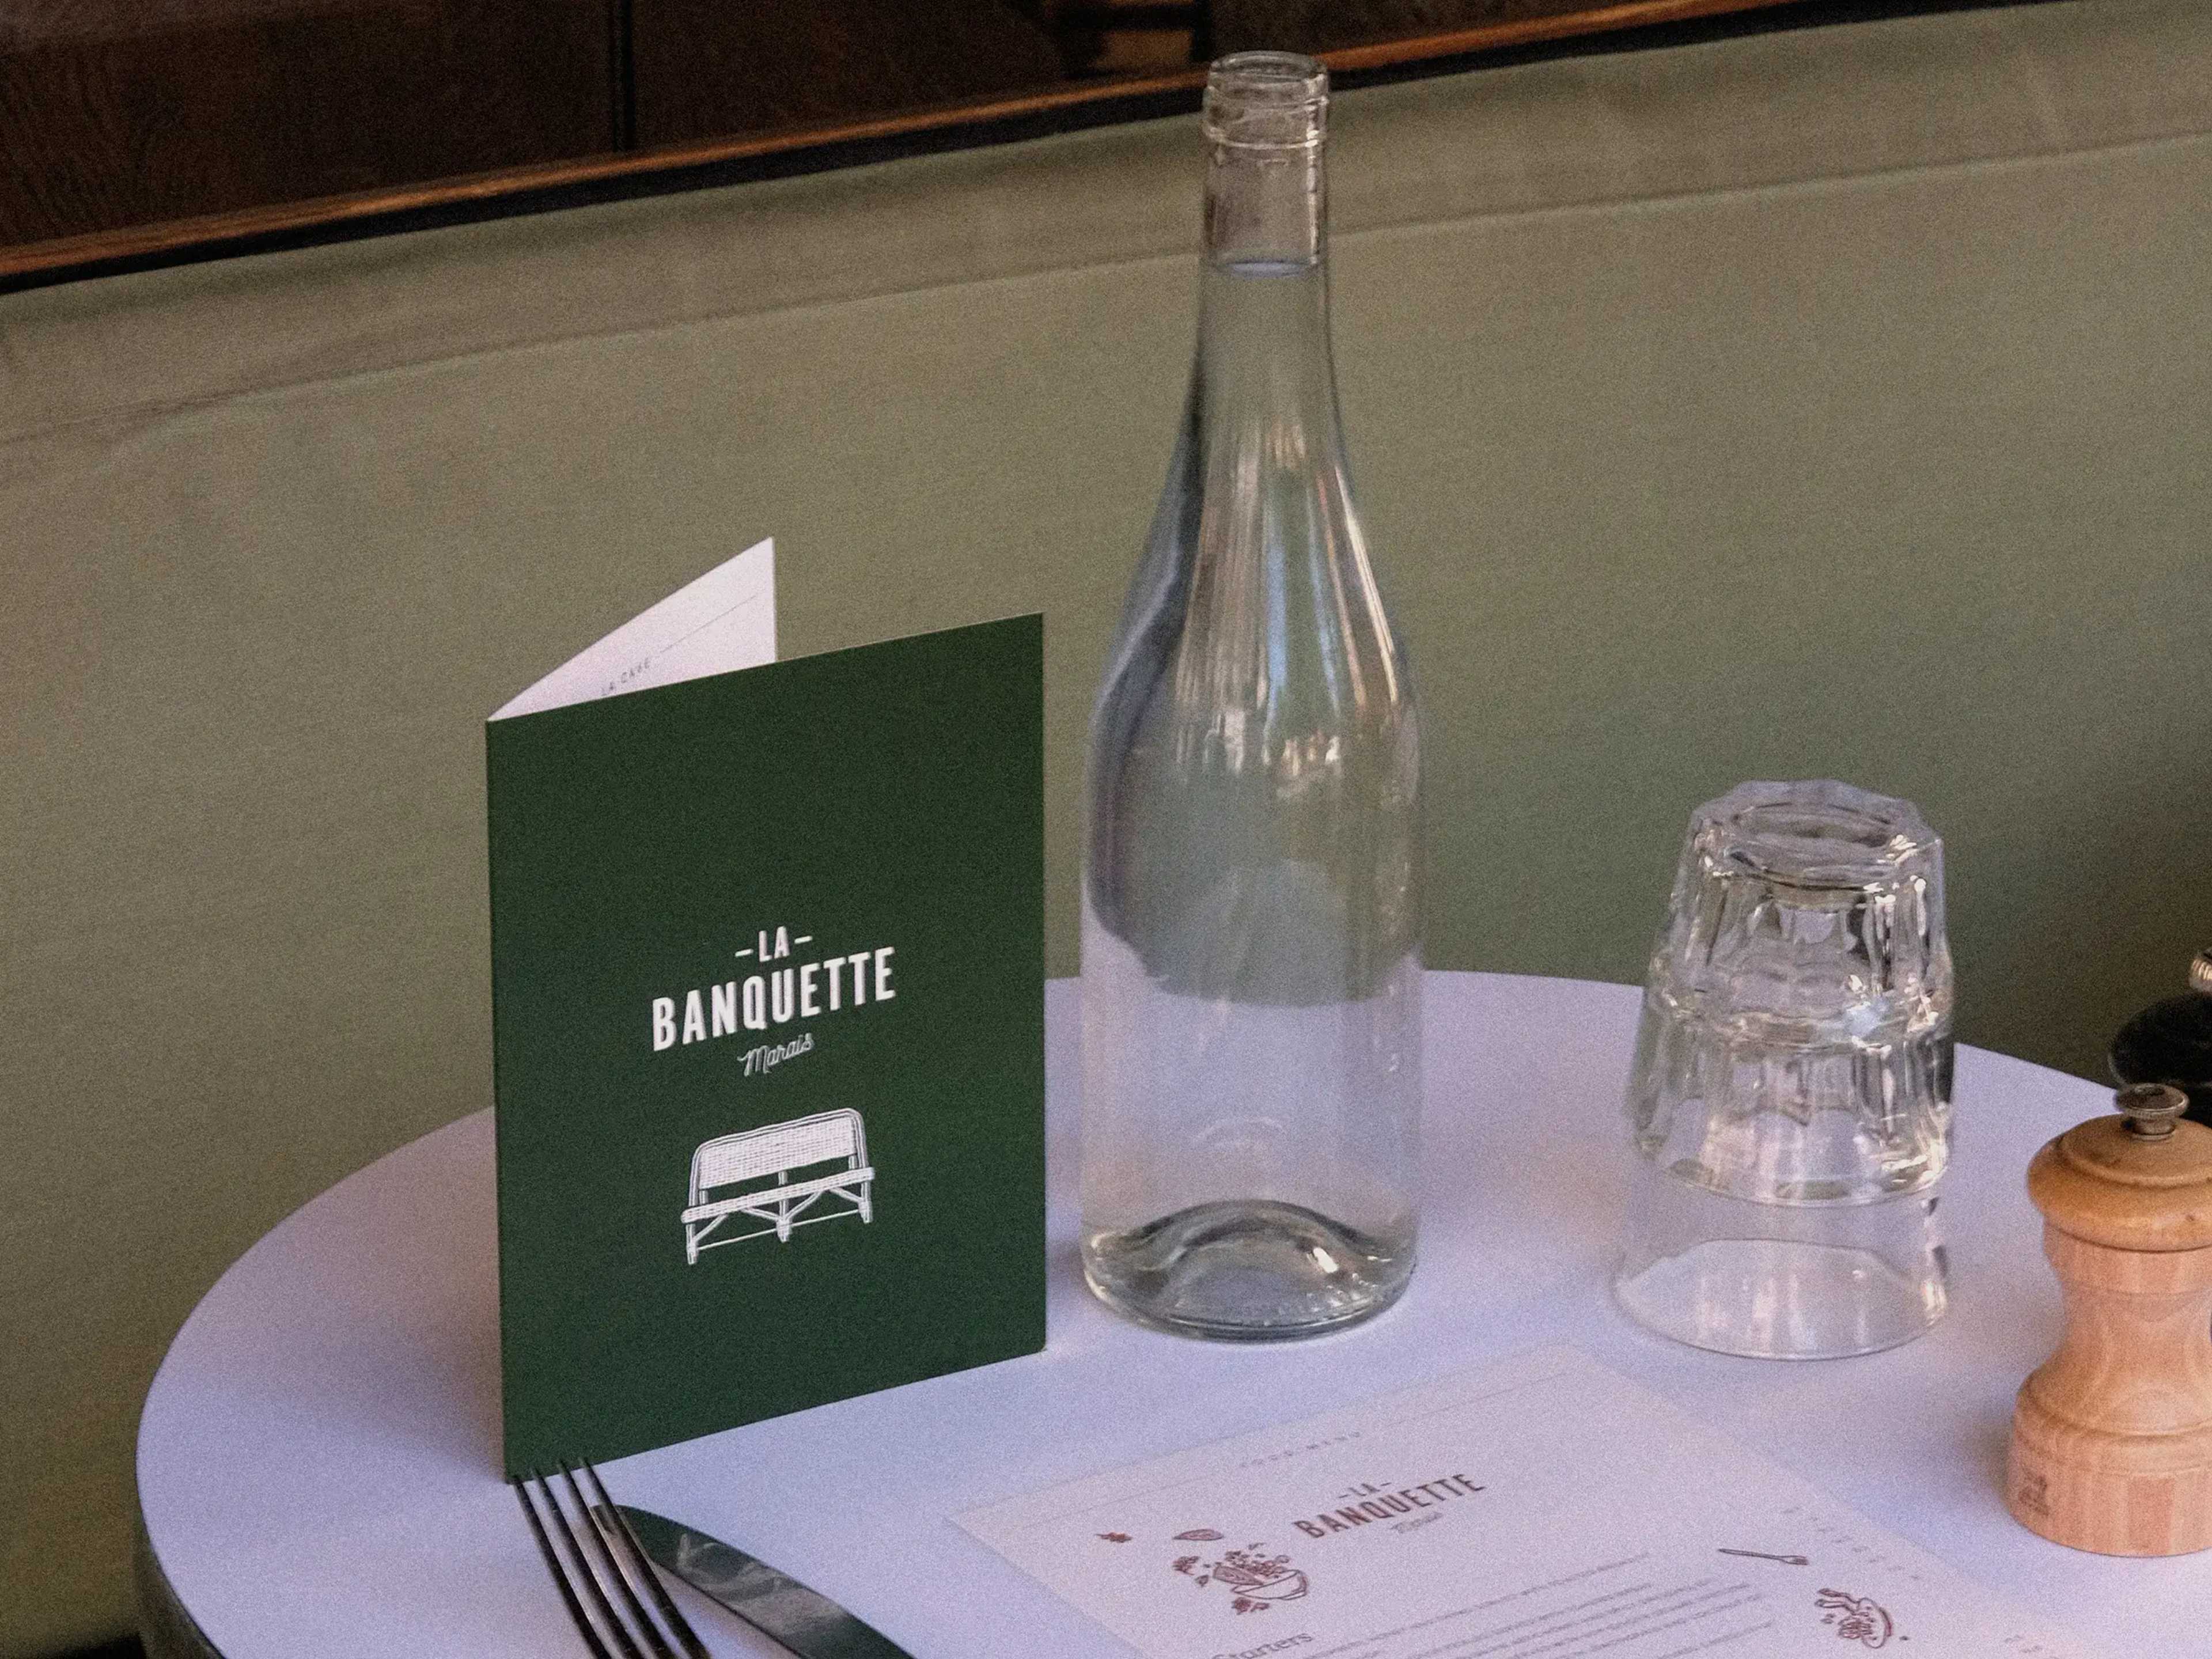 La Banquette, Parisian Bistrot cover